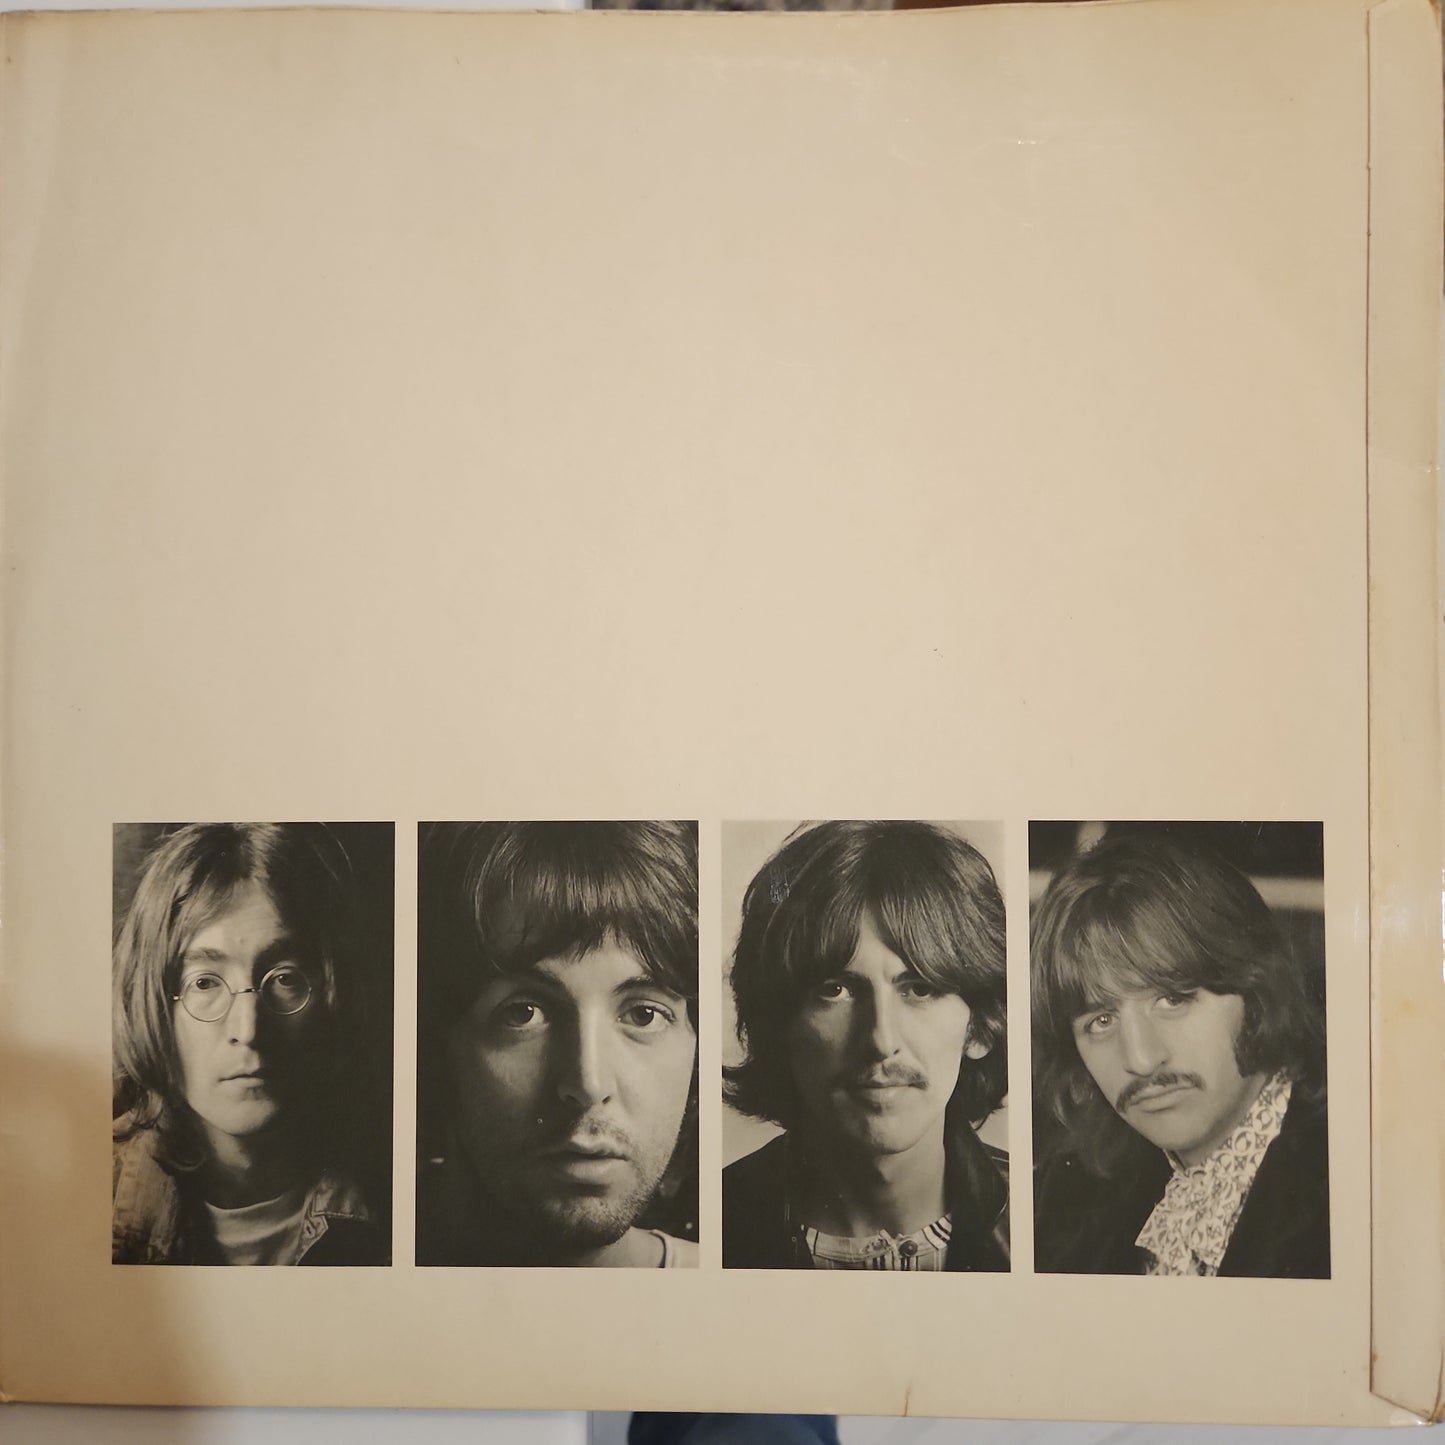 The Beatles - The Beatles (White Album) (N02)